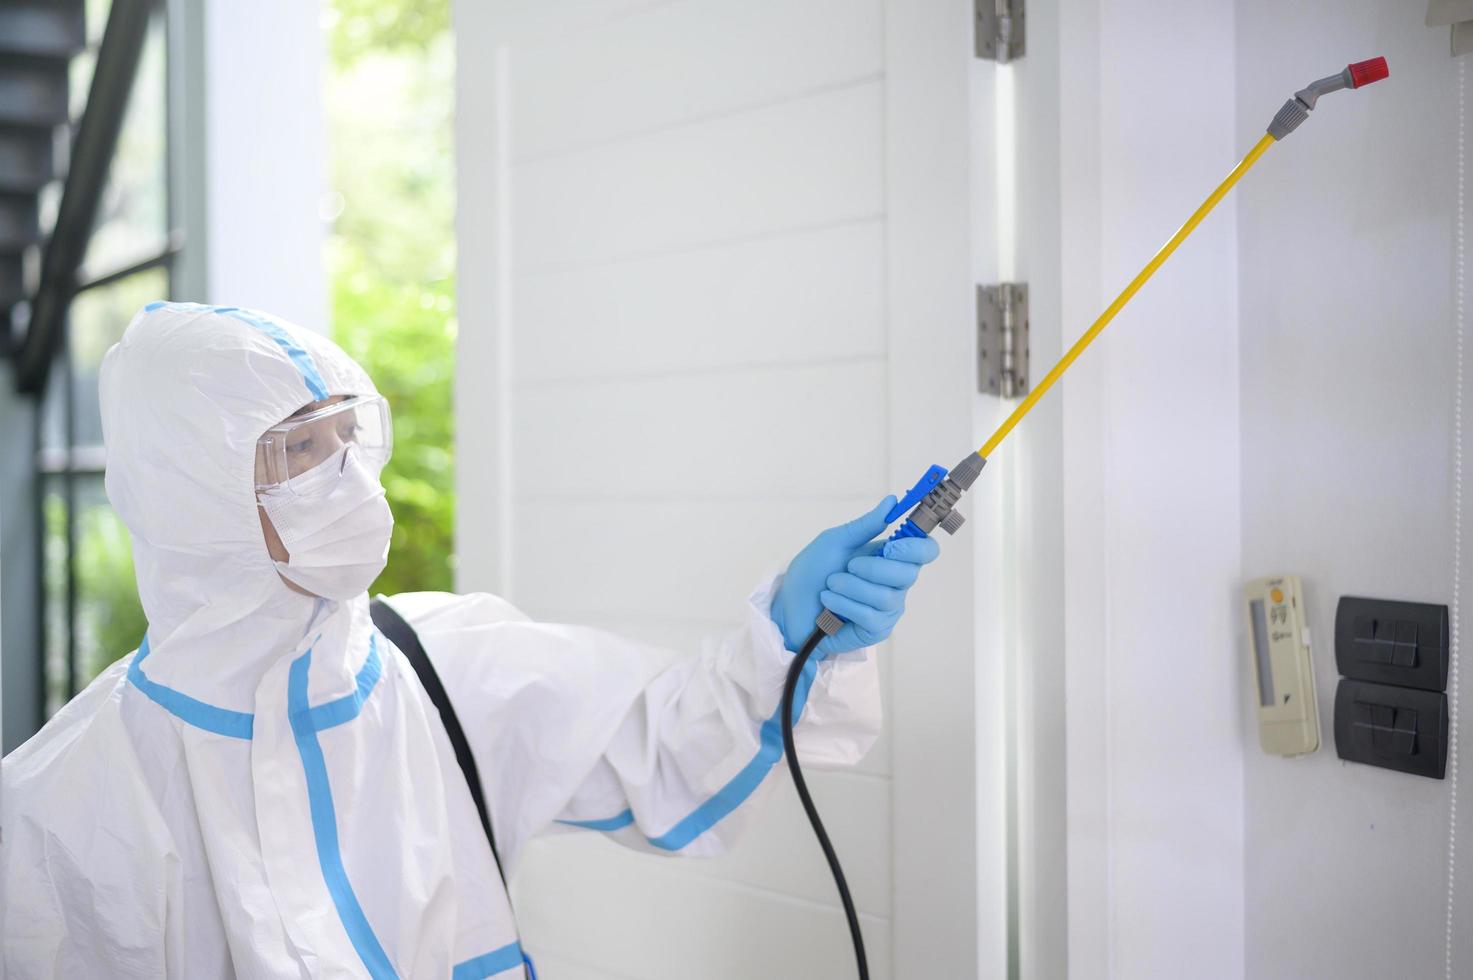 en medicinsk personal i ppe-kostym använder desinfektionsspray i vardagsrummet, covid-19-skydd, desinfektionskoncept. foto